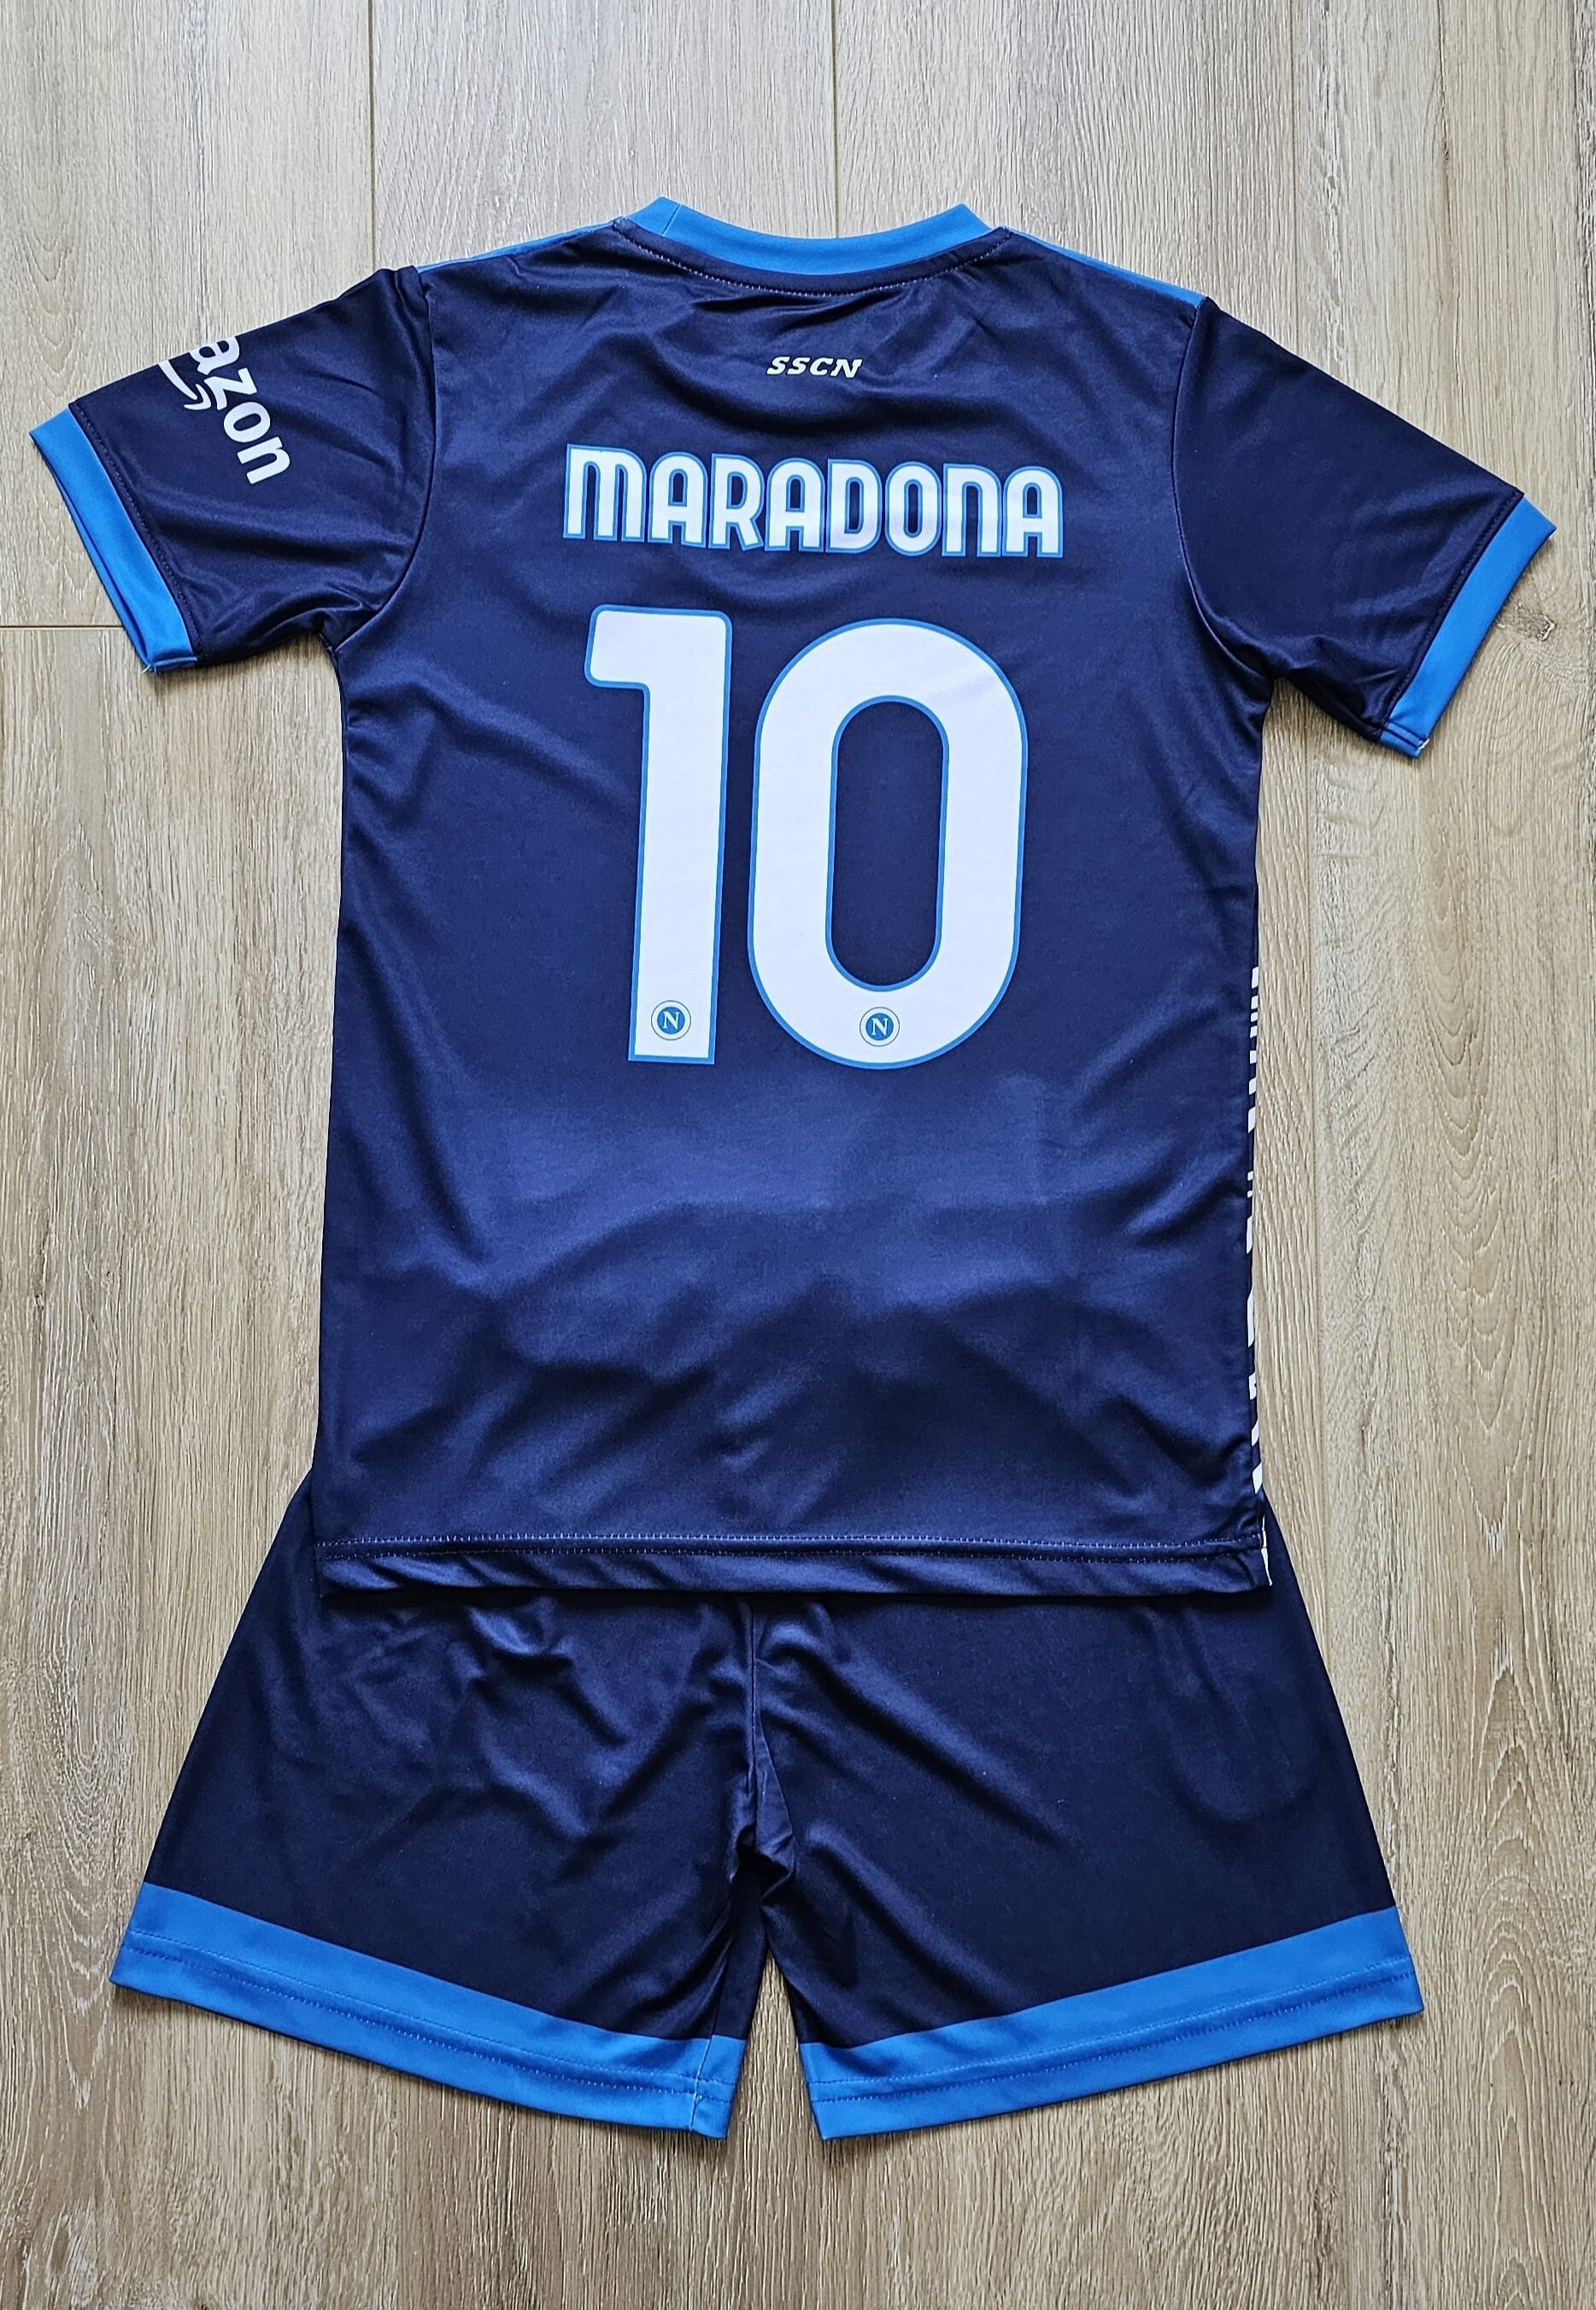 ADIDAS Boca Juniors 2020/2021 Jersey Men's Size M Maradona